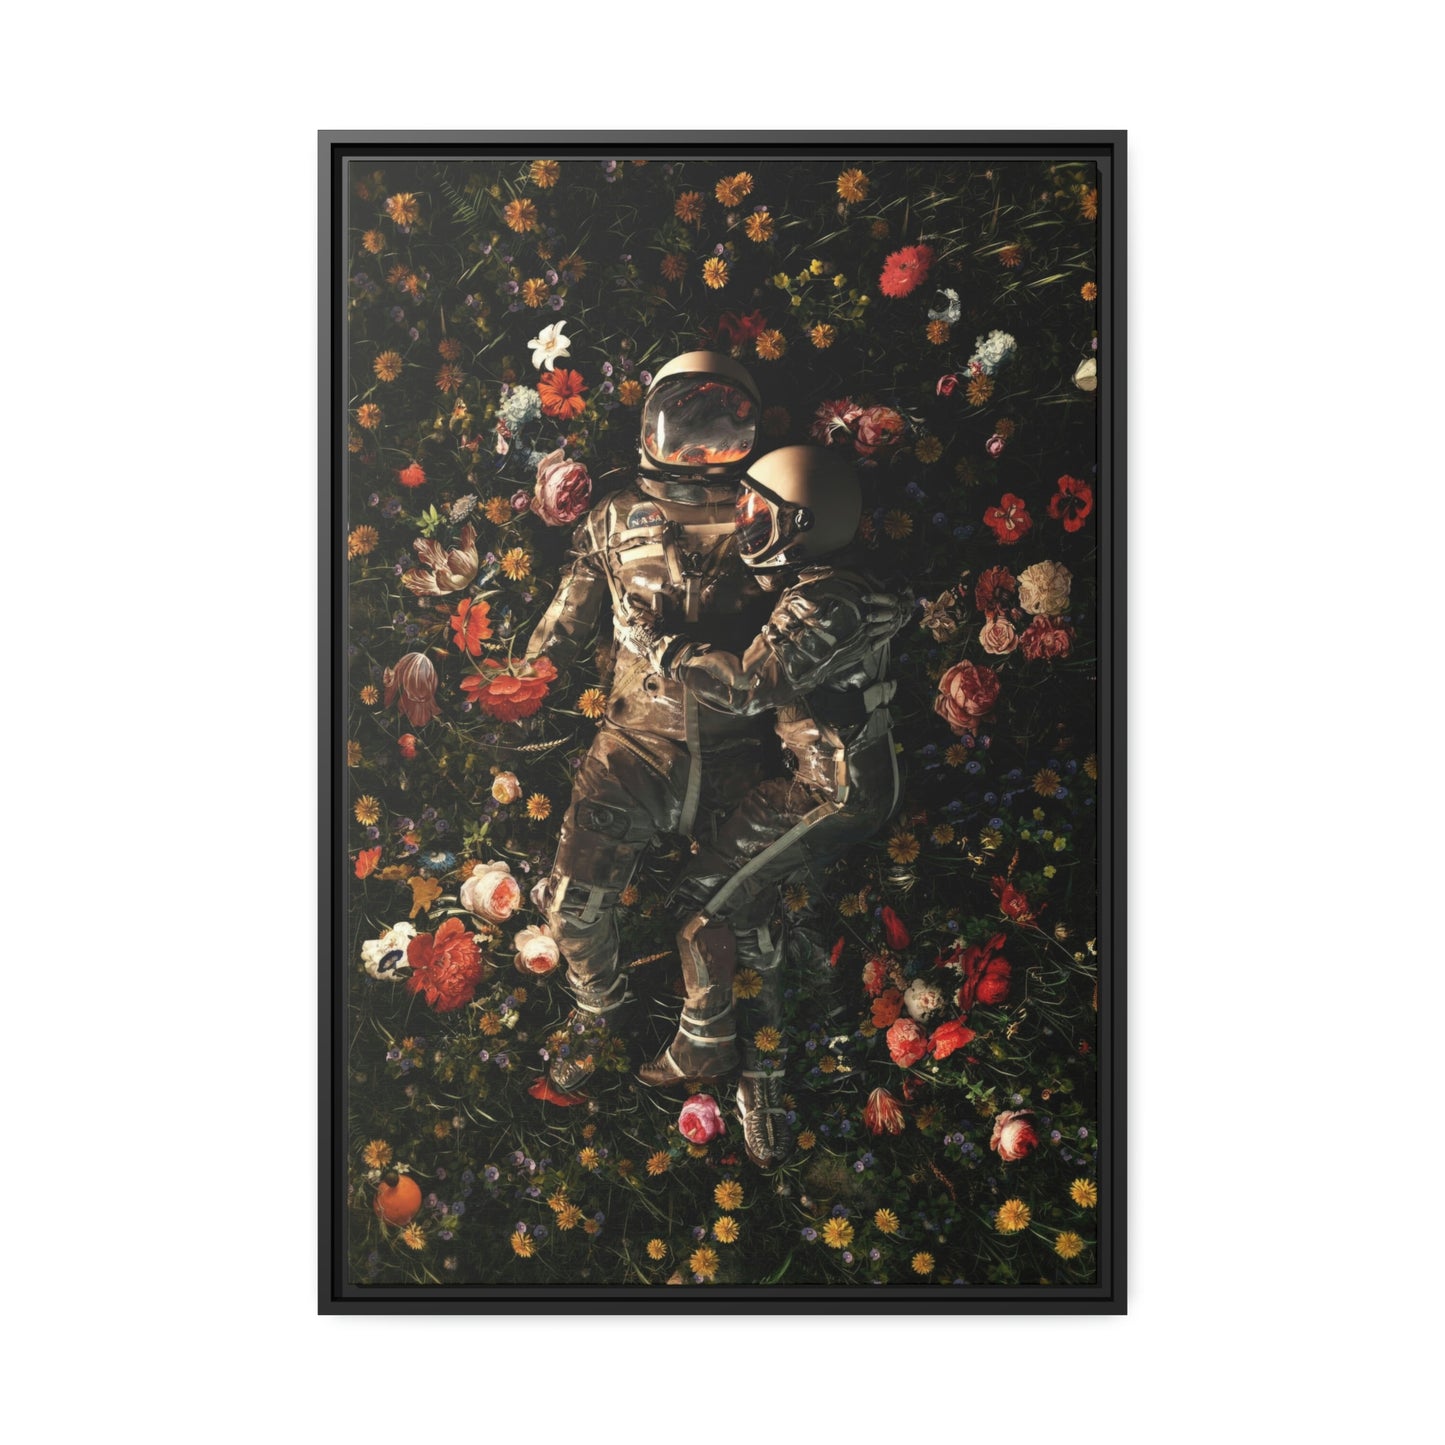 Garden Delight 2 - Gallery Grade Canvas In Floater Frame by Nicebleed